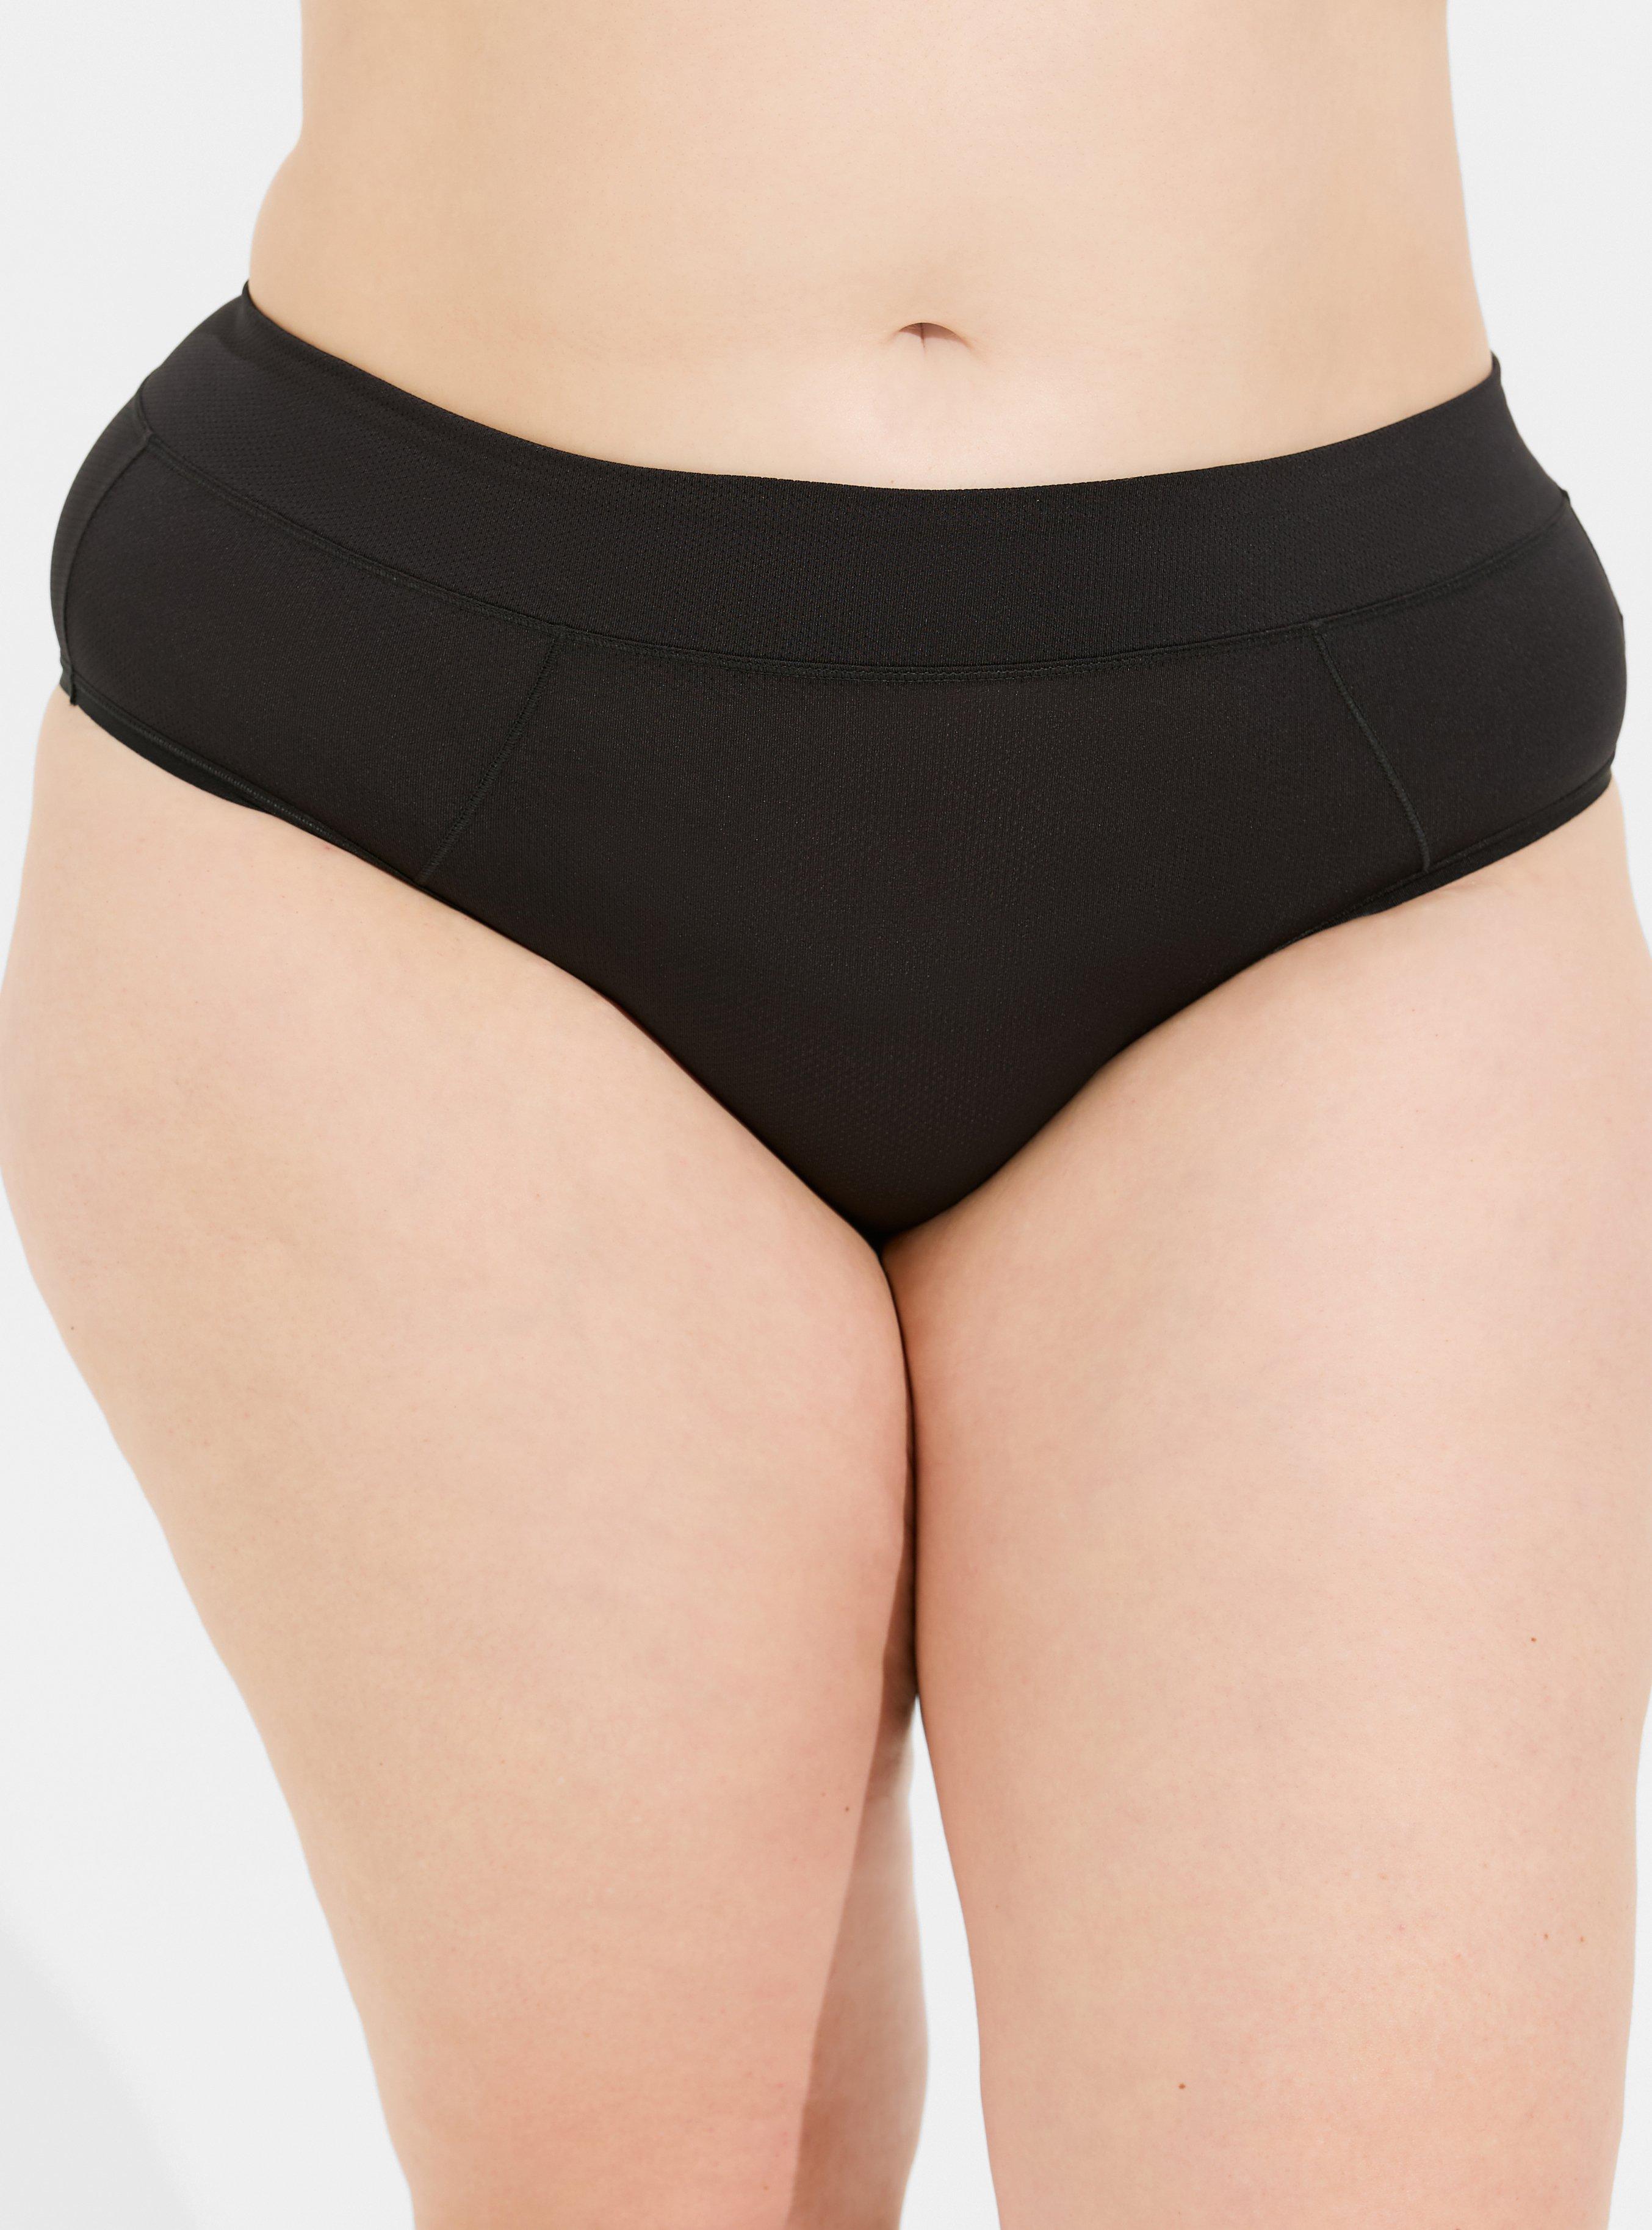 Gilligan & O'Malley Thong Panty Underwear, Women's Panties, Multi Option  Lot